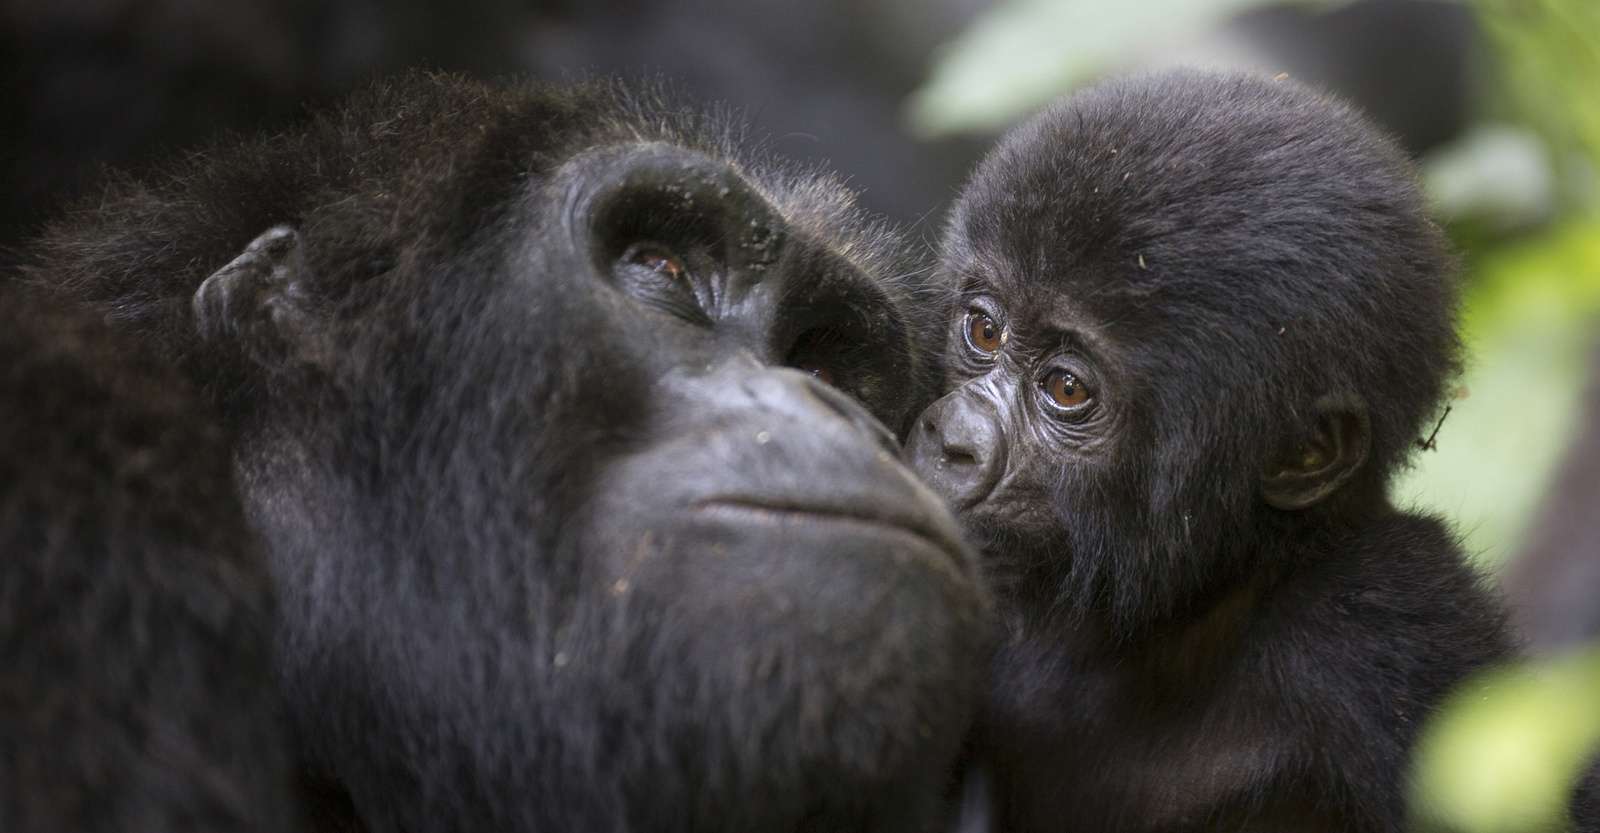 Baby and mother mountain gorillas, Bwindi Impenetrable National Park, Uganda.